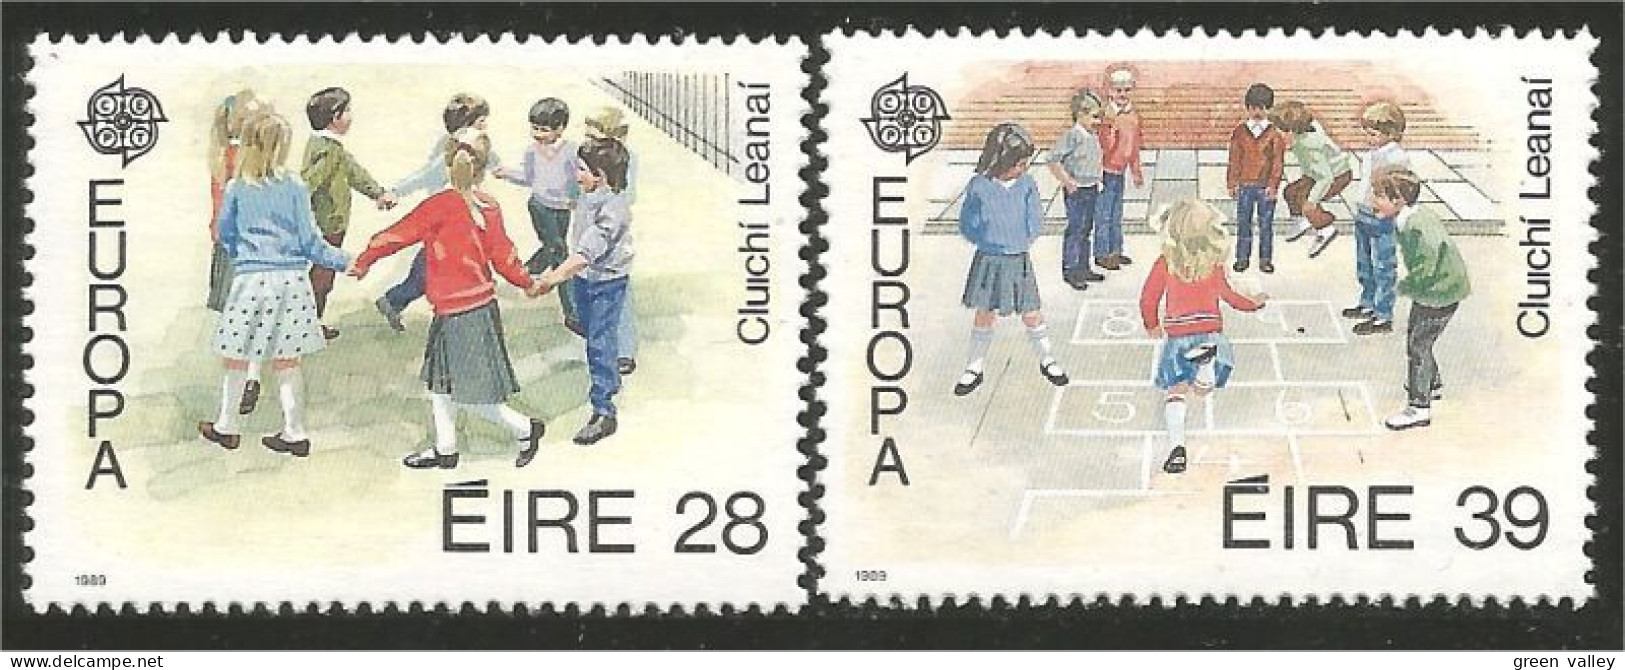 EU89-5a EUROPA-CEPT 1989 Irlande Jeux Enfants Children Games Kinderspiele MNH ** Neuf SC - 1989